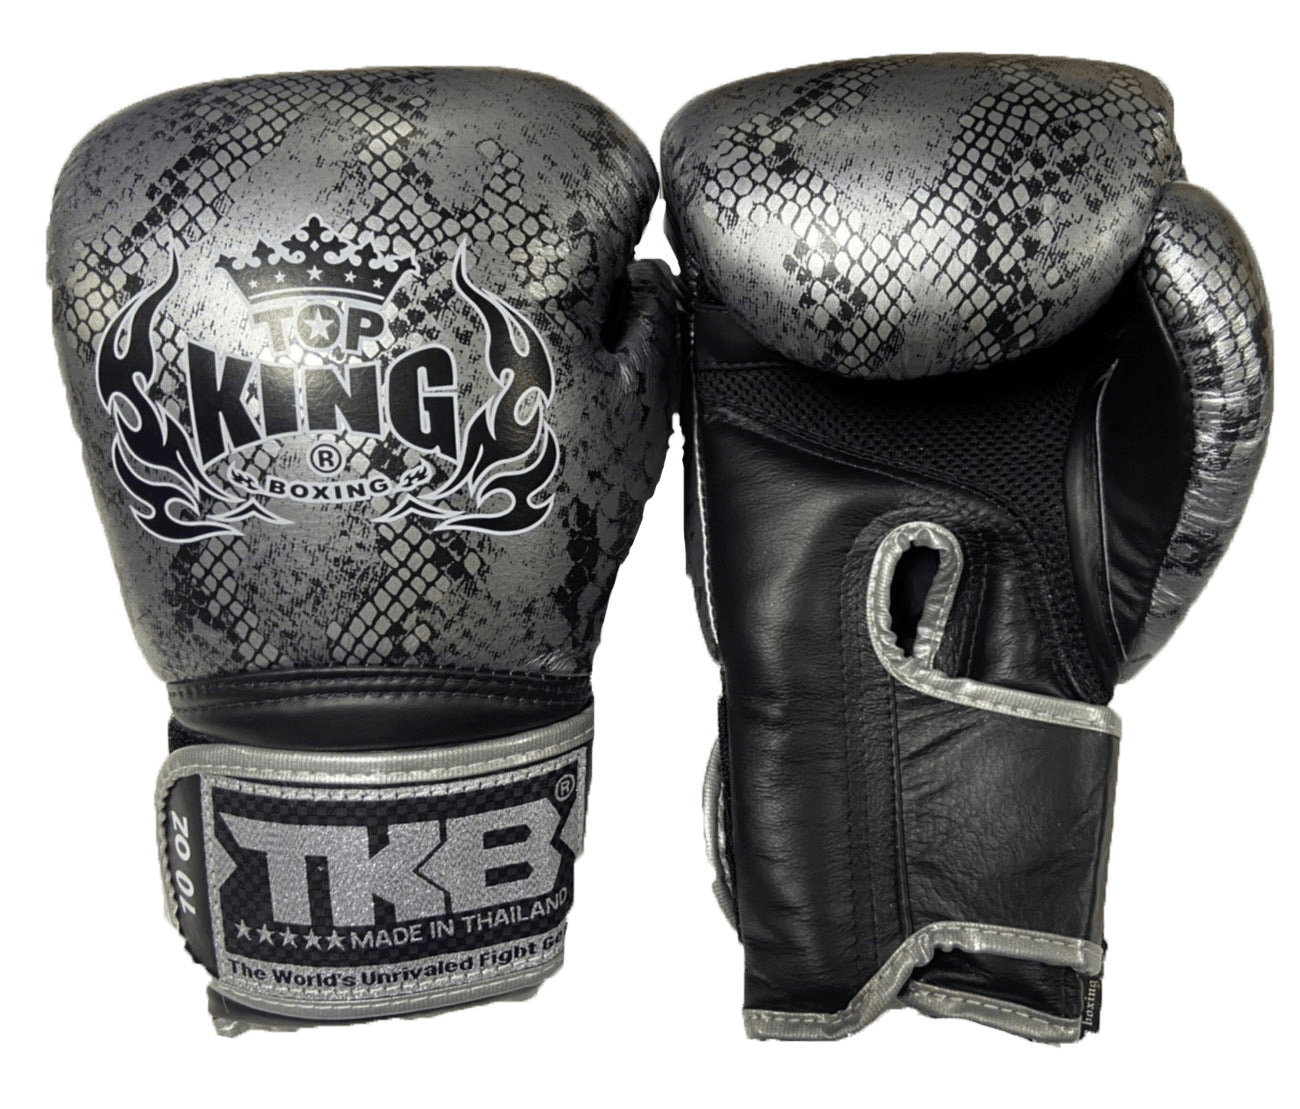 Top King Boxing Gloves "Super Snake" Air TKBGSS-02 Black(Silver) - SUPER EXPORT SHOP